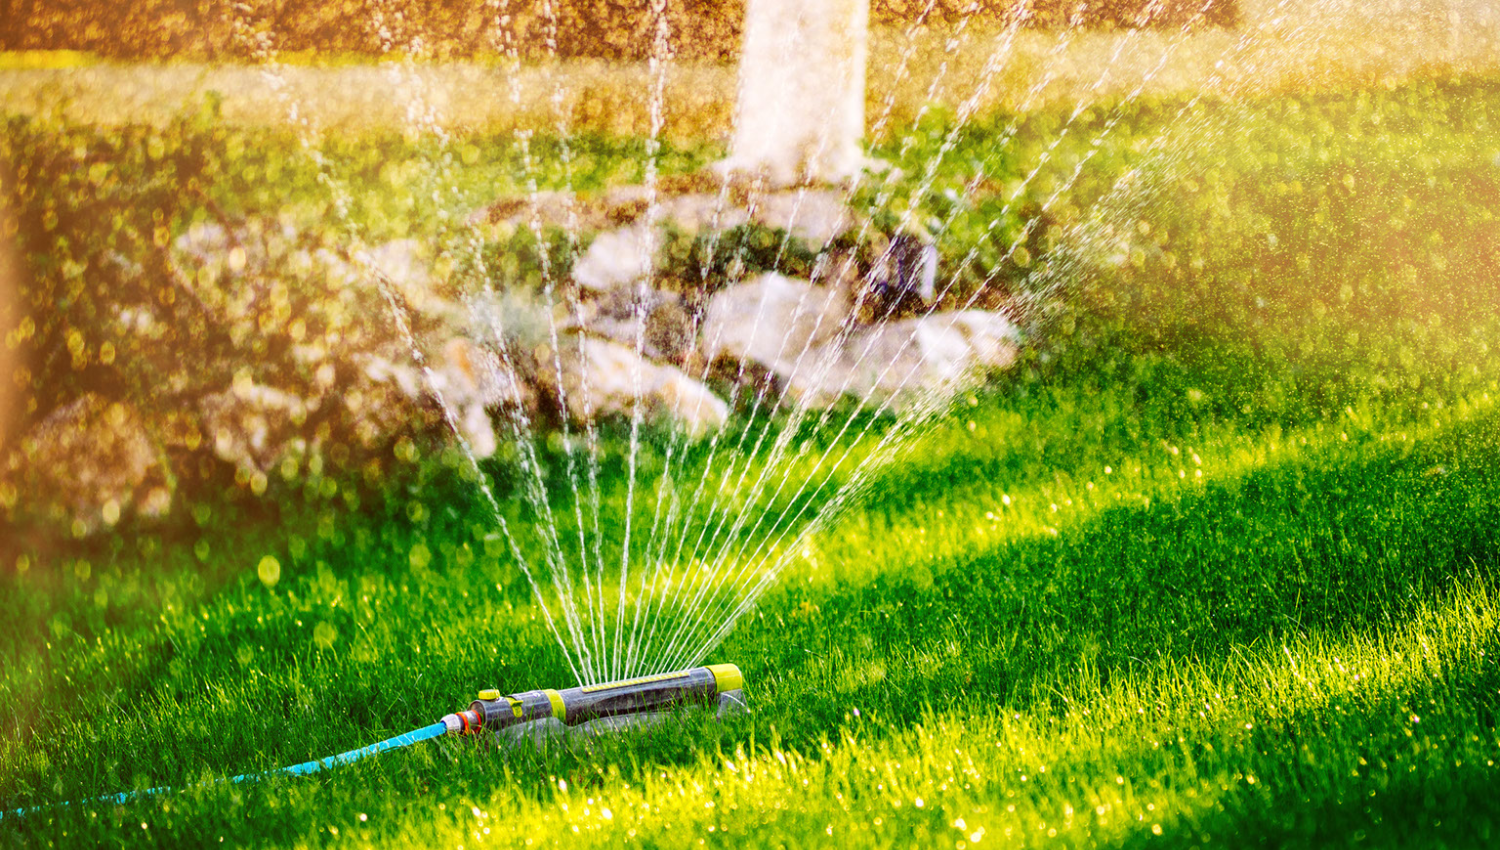 Sprinkler Watering Lawn in Morning